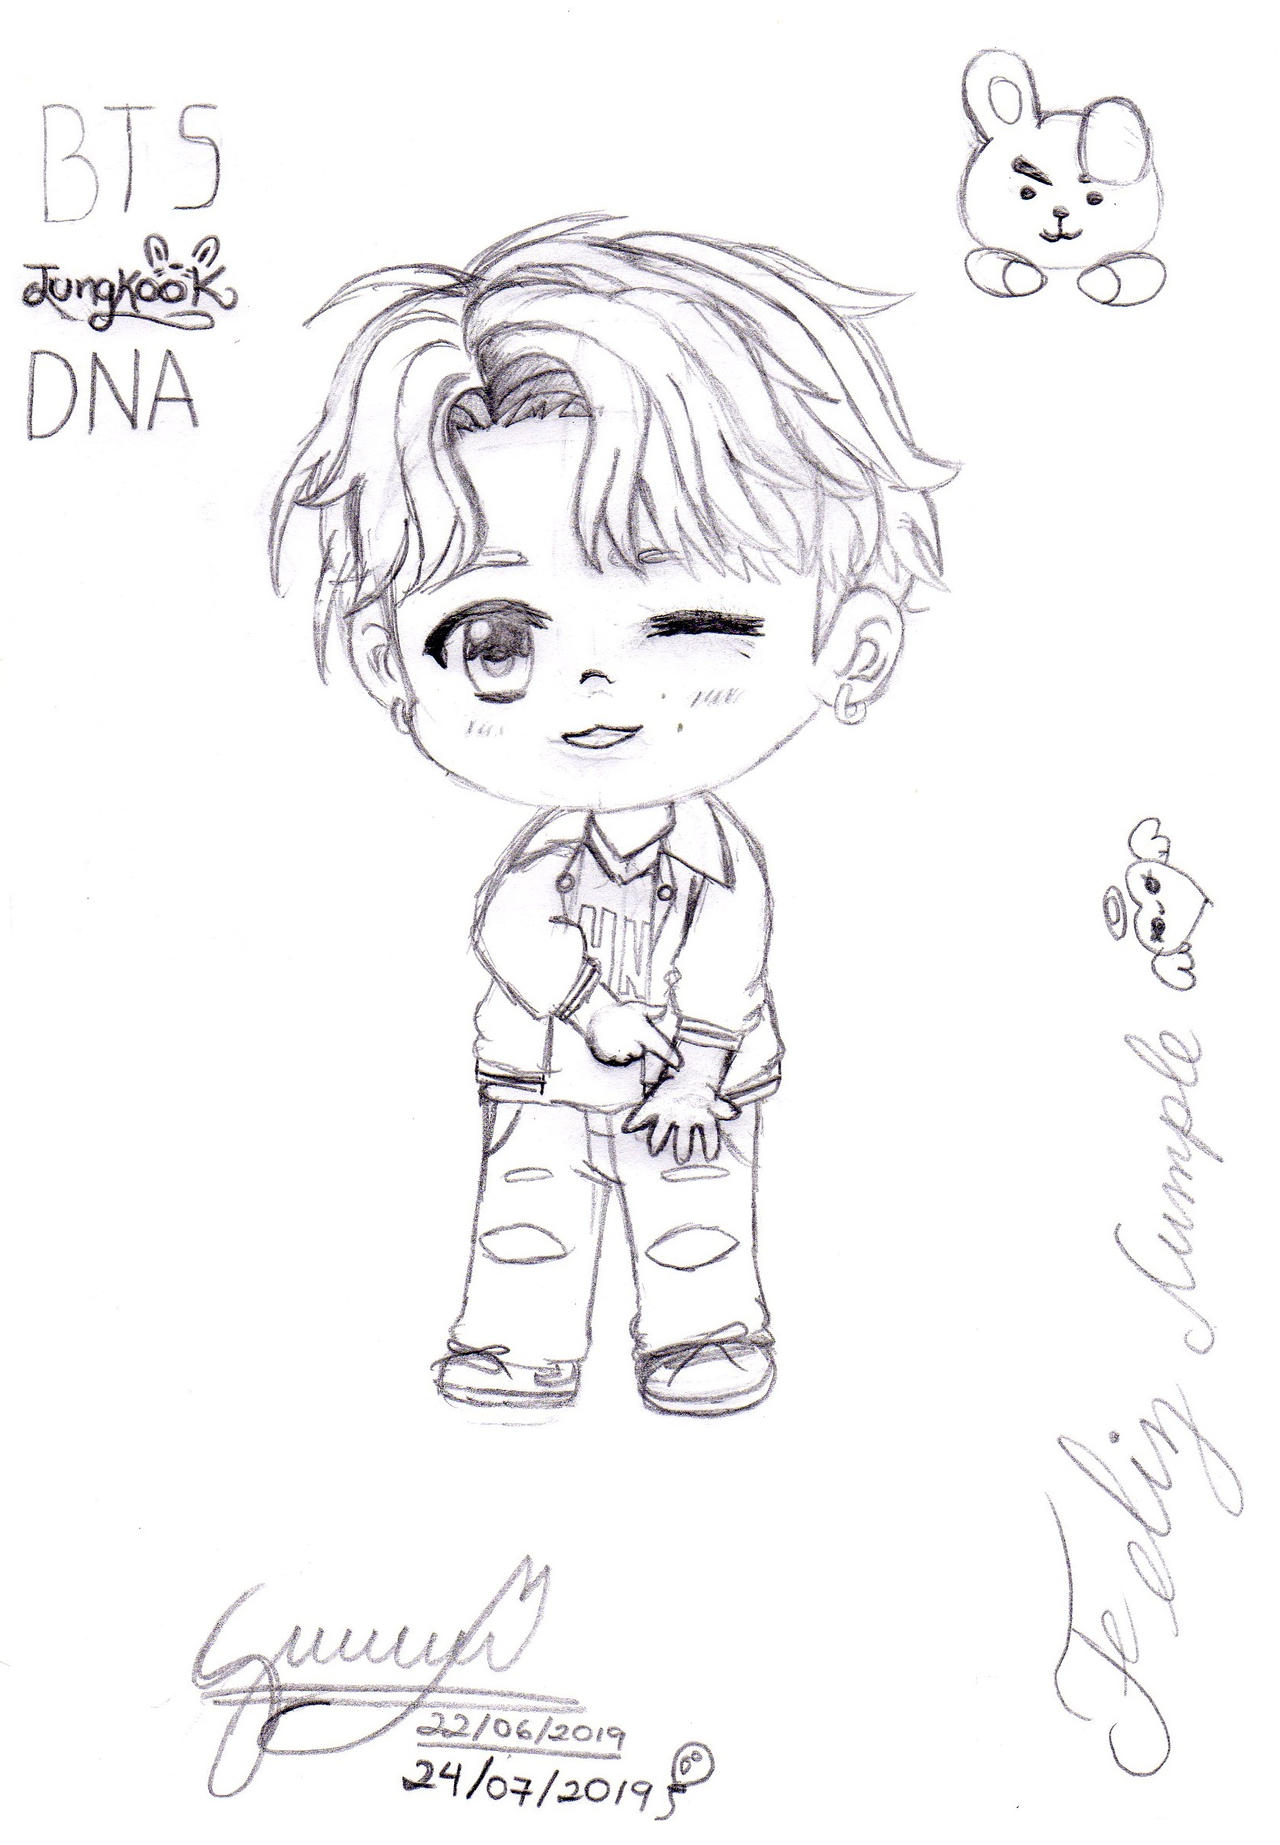 BTS jungkook chibi (DNA) by apologato on DeviantArt